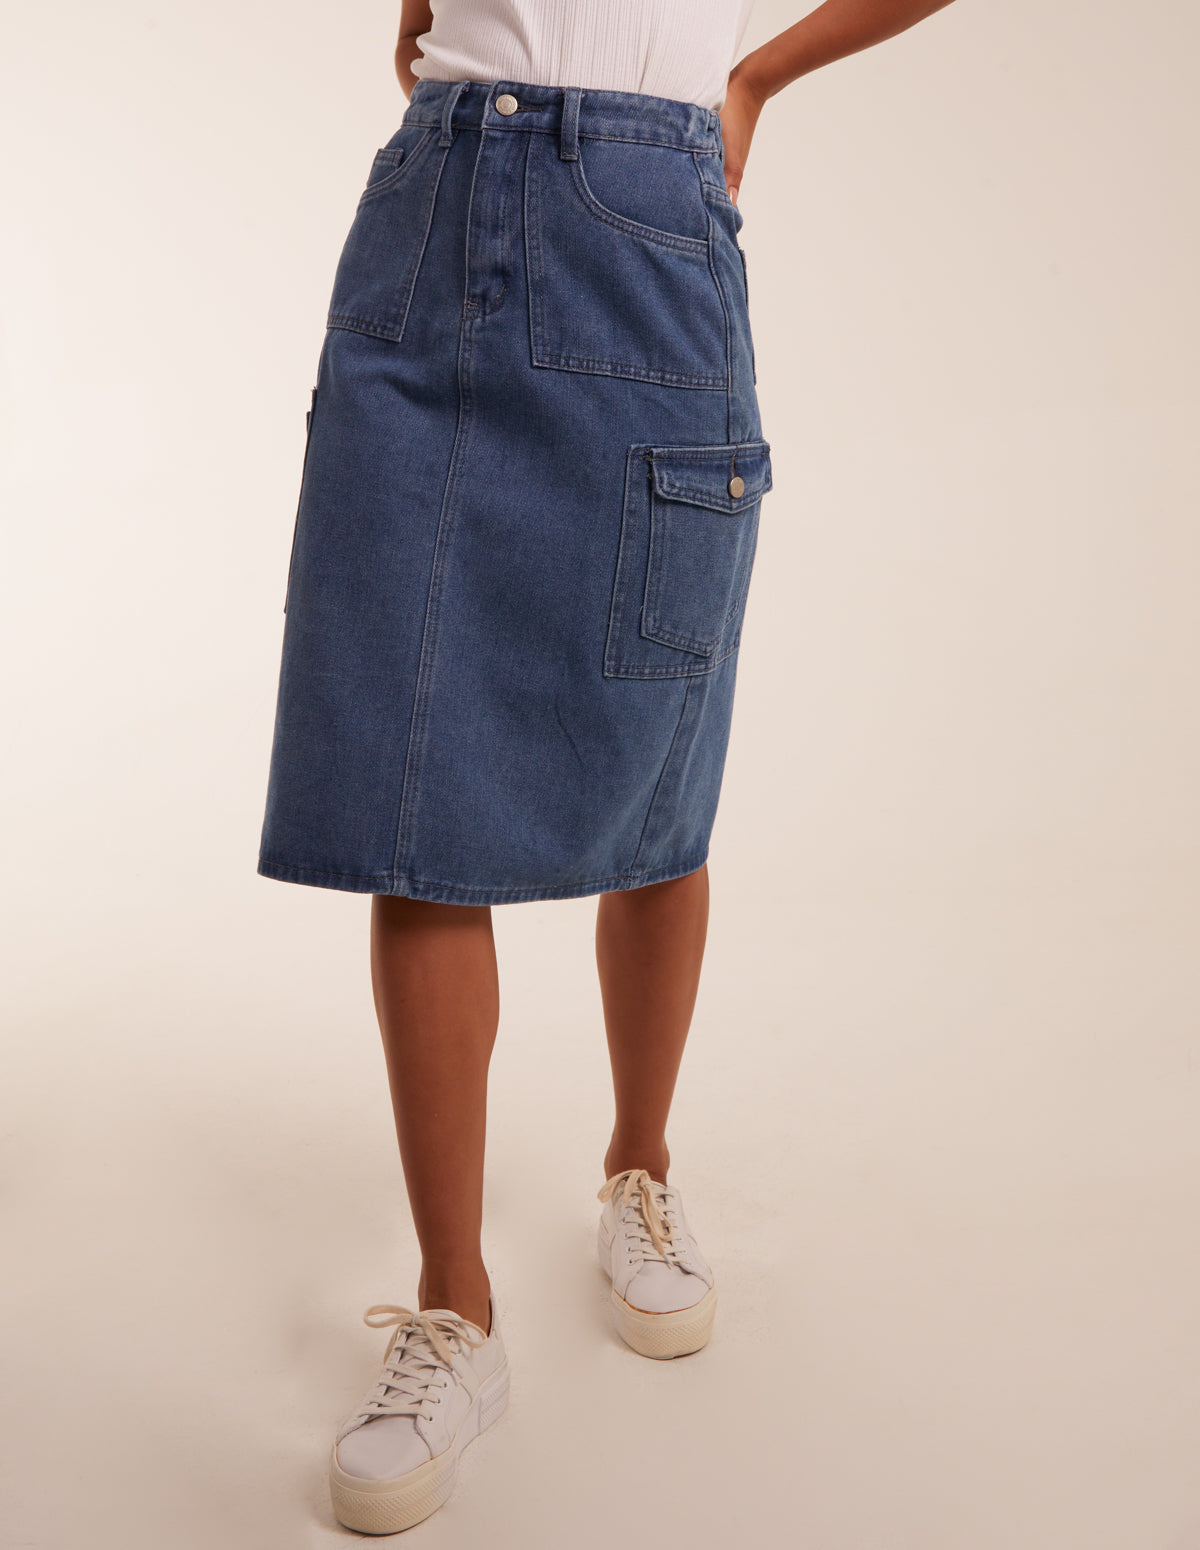 Pocket Denim Skirt - 12 / DENIM